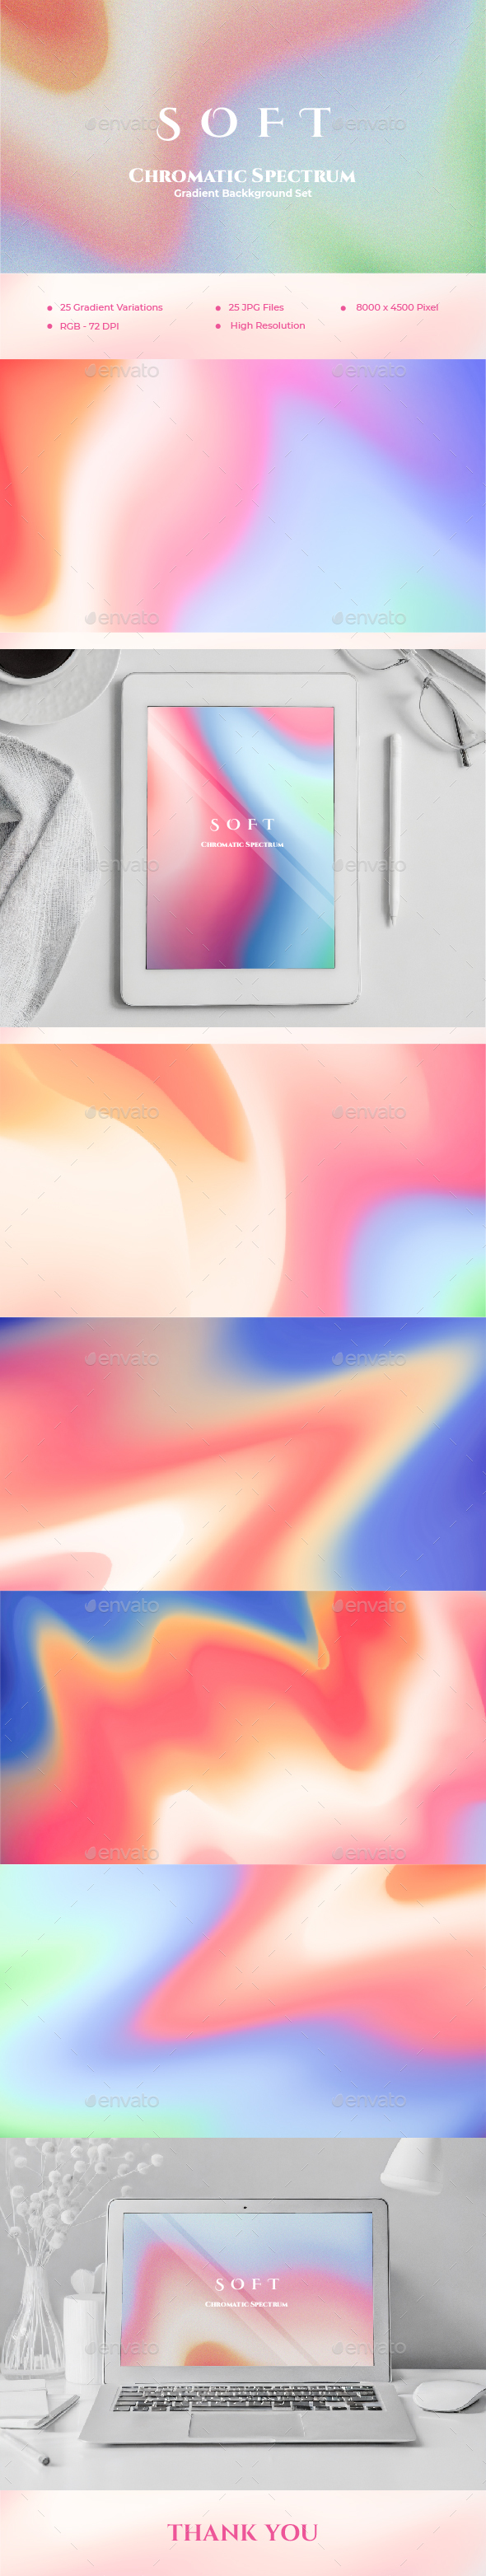 Soft Chromatic Spectrum - Gradient Background Set